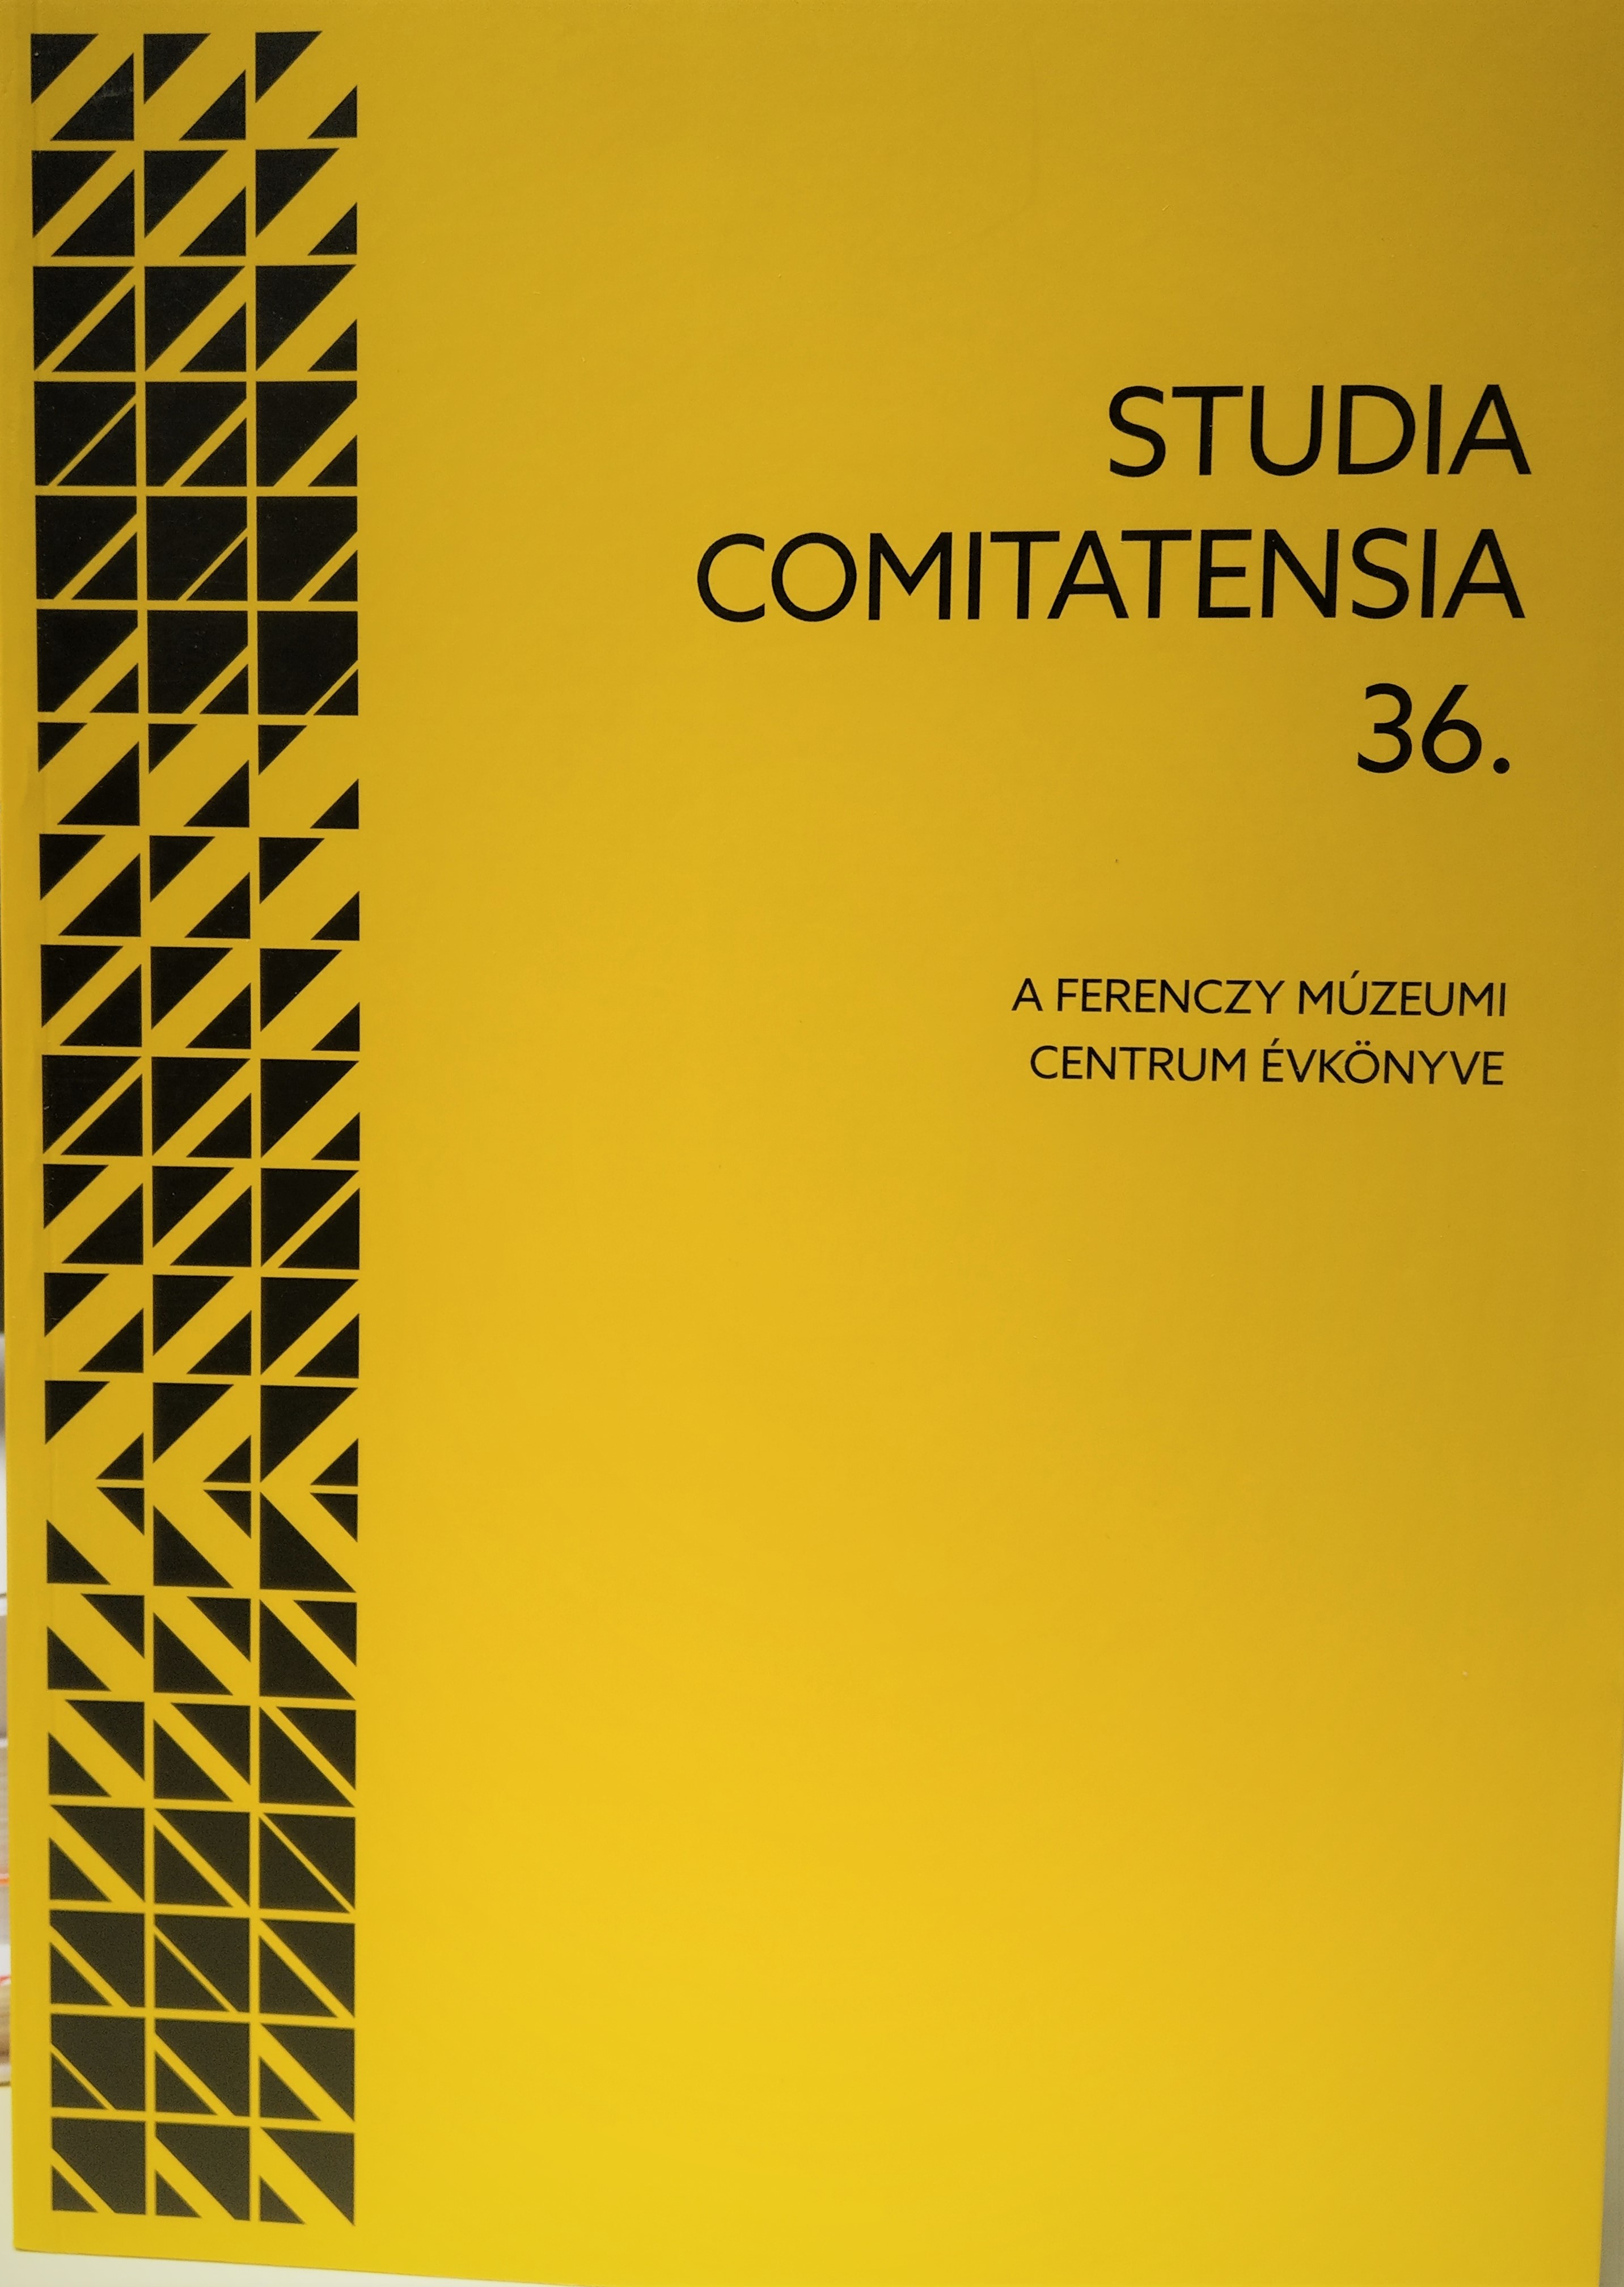 Studia Comitatensia 2018/36. szám (Rippl-Rónai Múzeum CC BY-NC-ND)